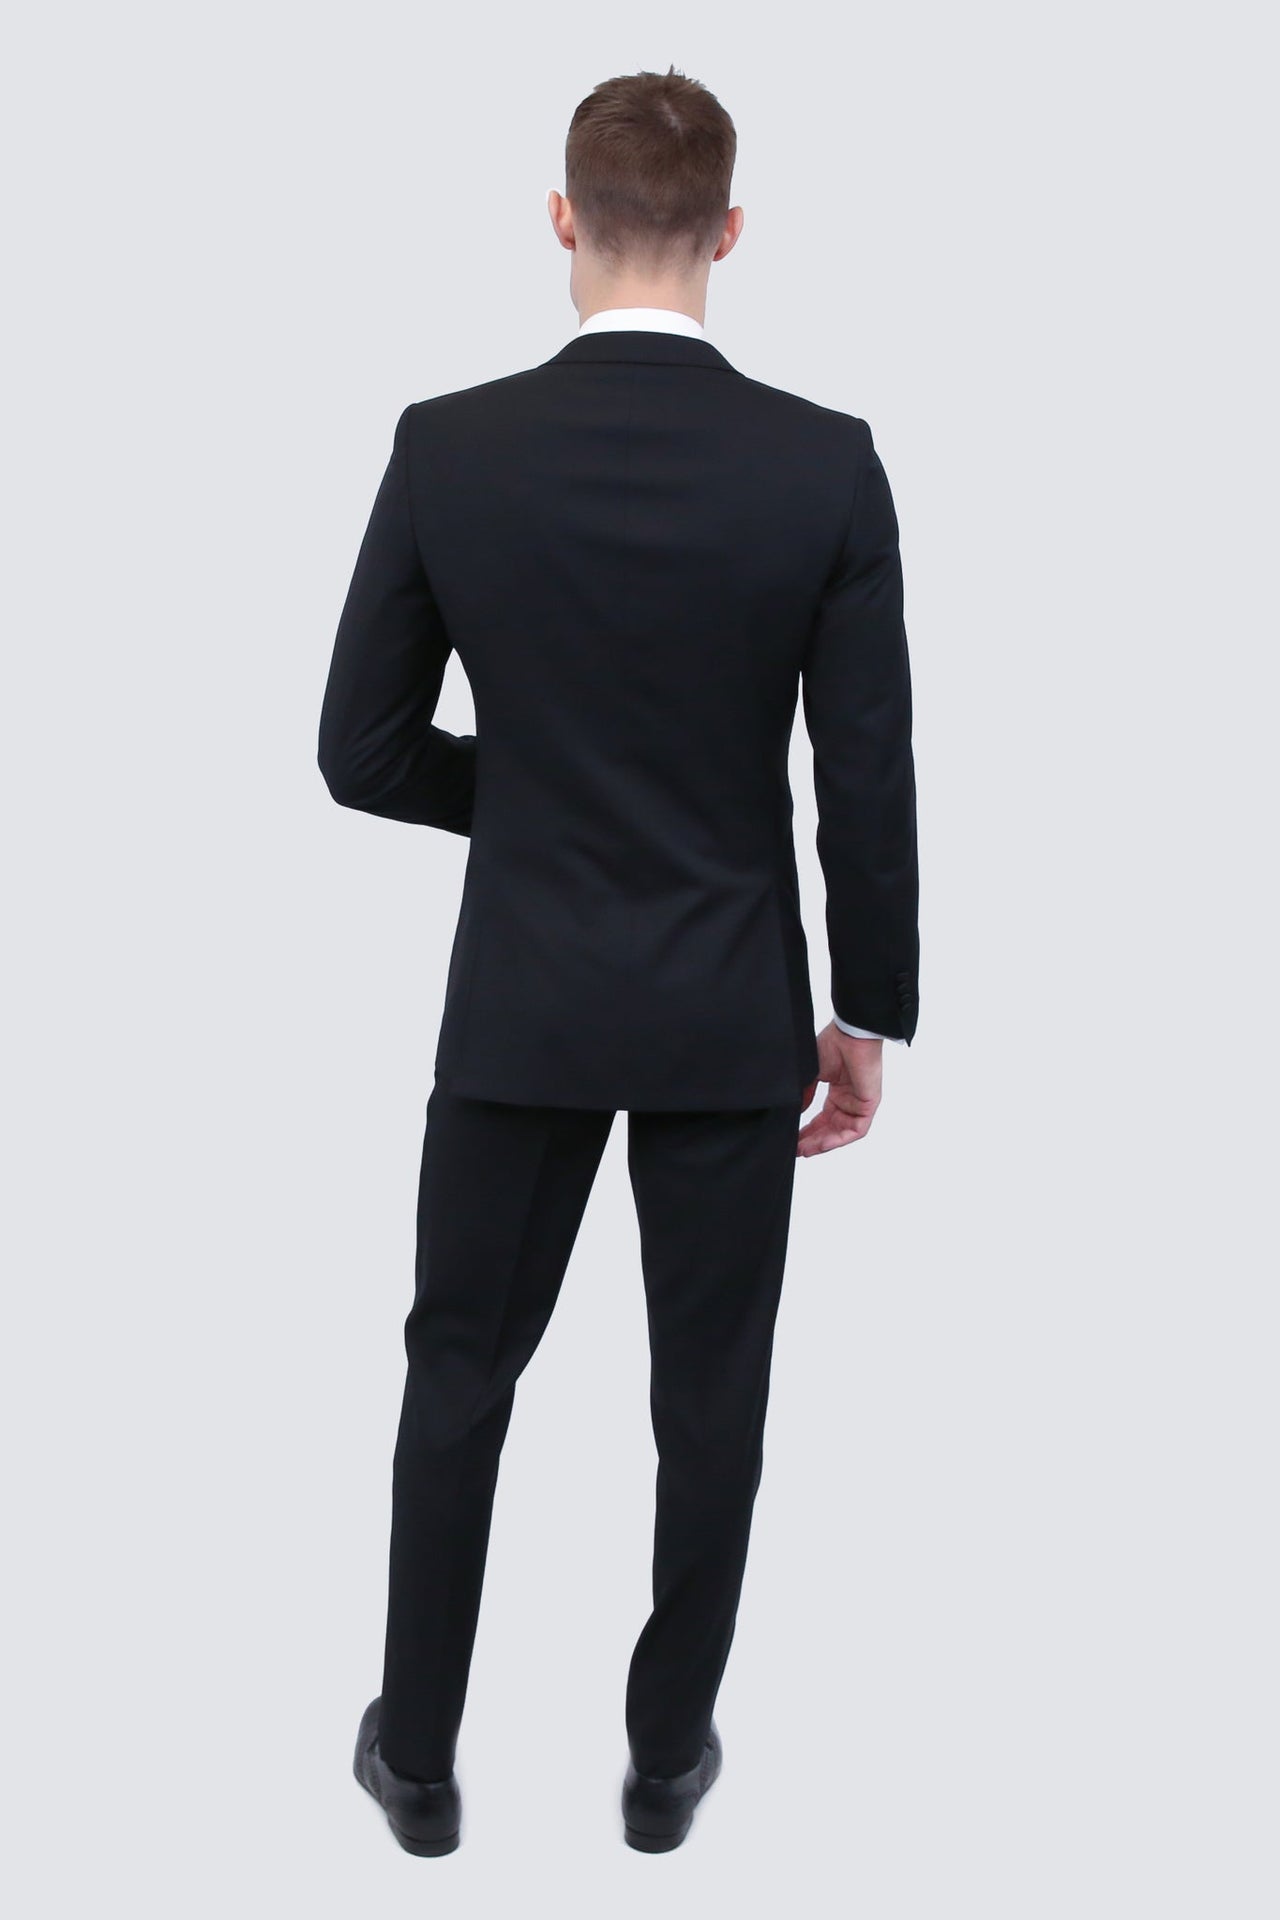 Tailor's Stretch Blend Black Tuxedo | Modern or Slim Fit - Tomasso Black